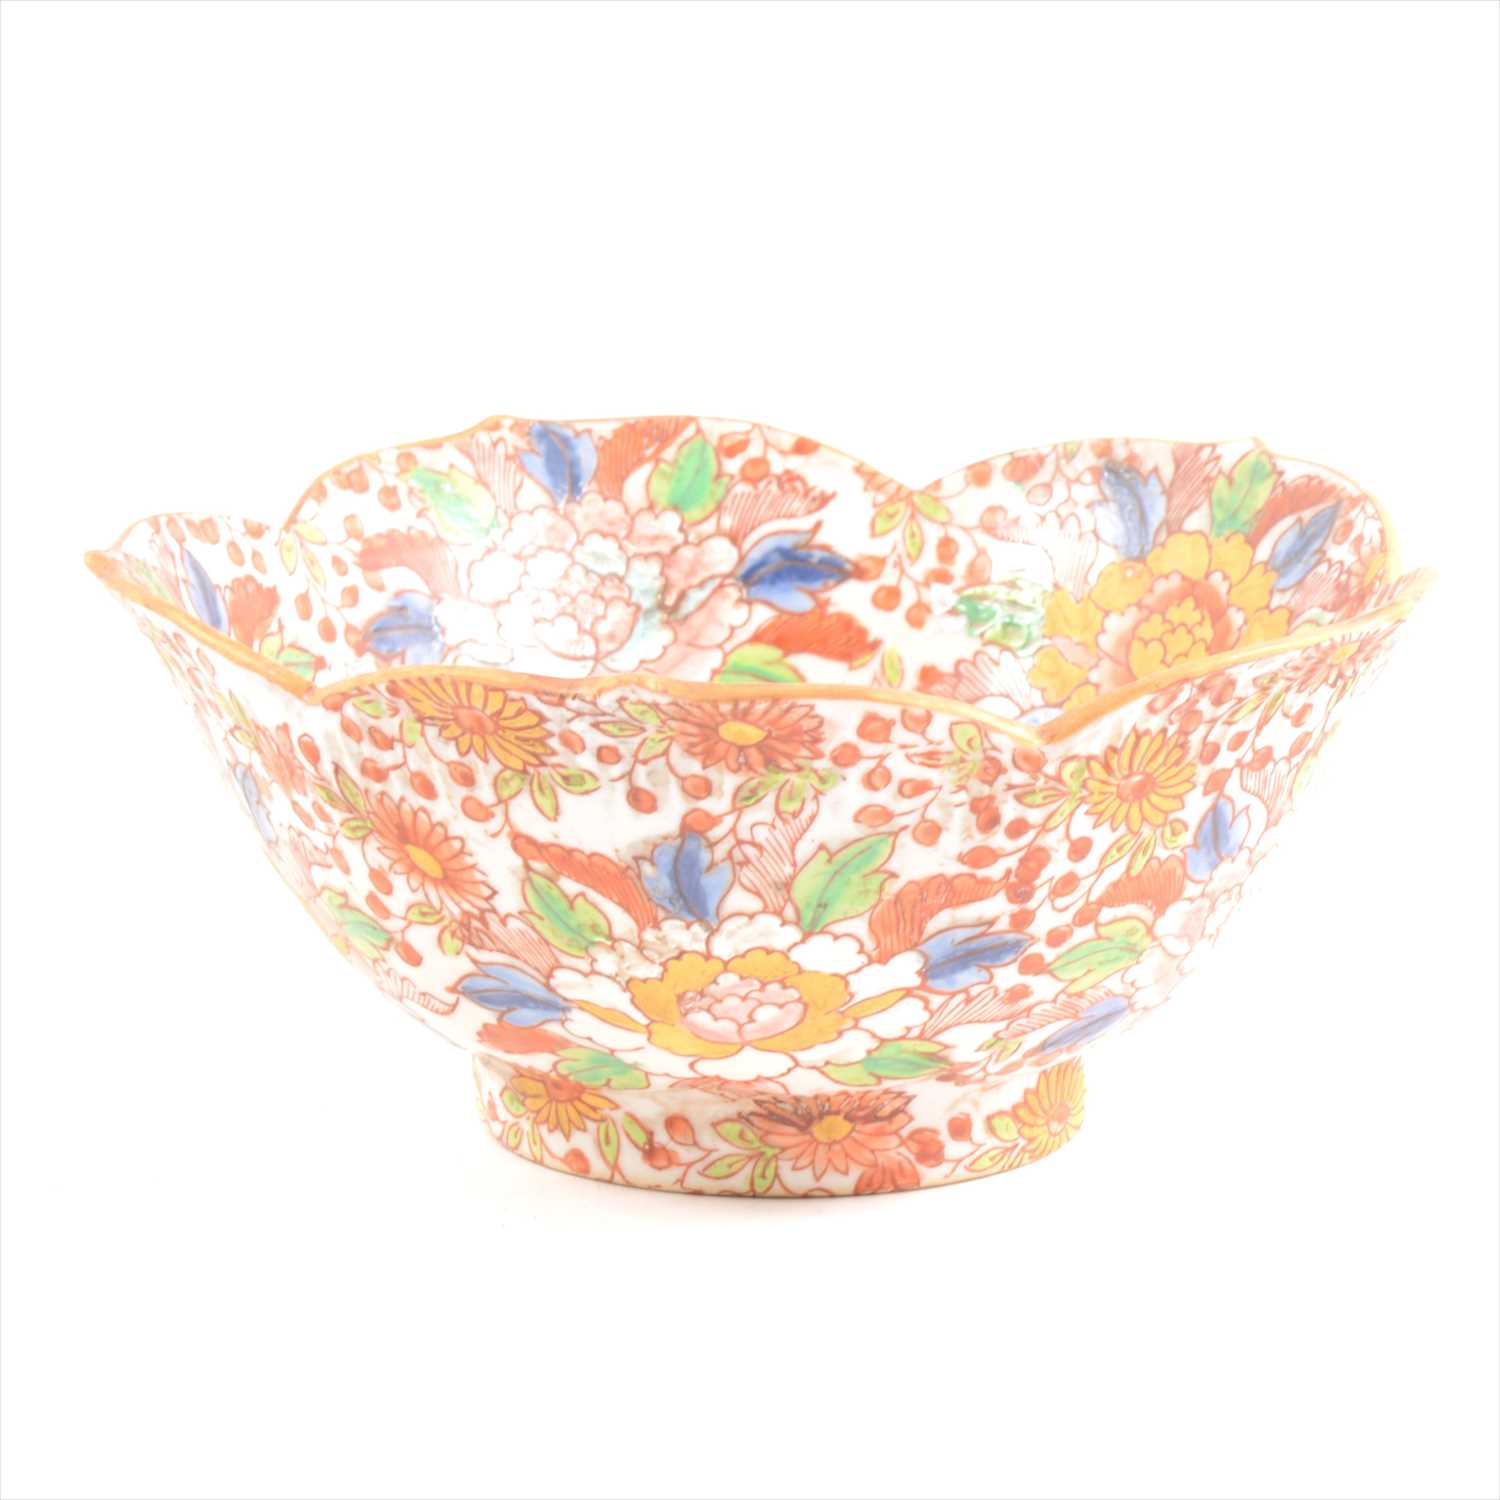 Lot 41 - A modern Chinese polychrome bowl